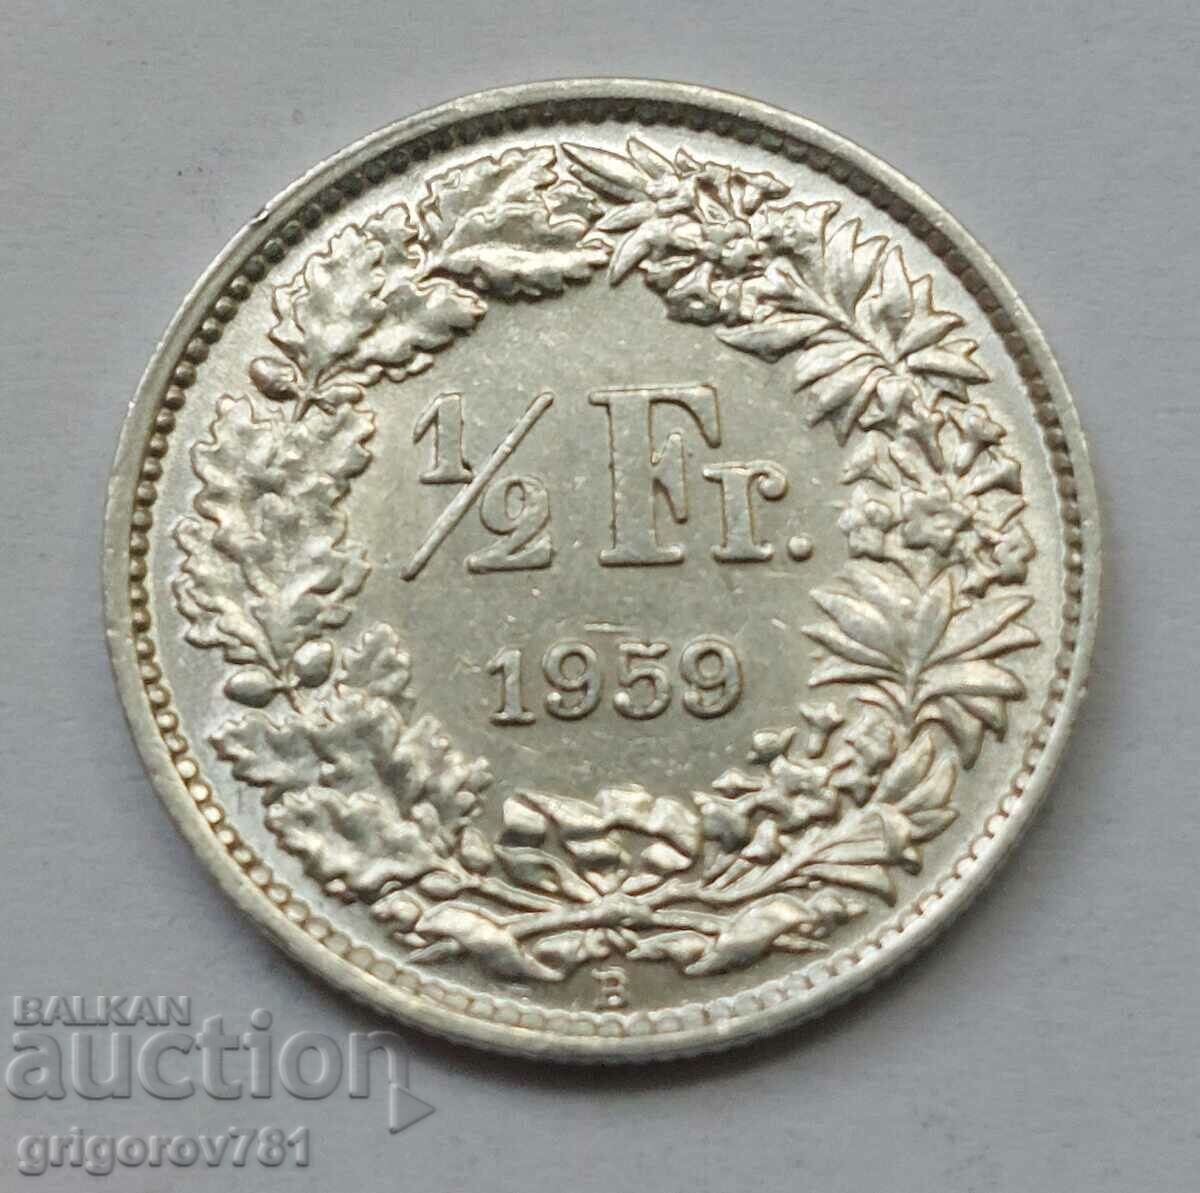 1/2 Franc Argint Elveția 1959 B - Monedă de argint #143